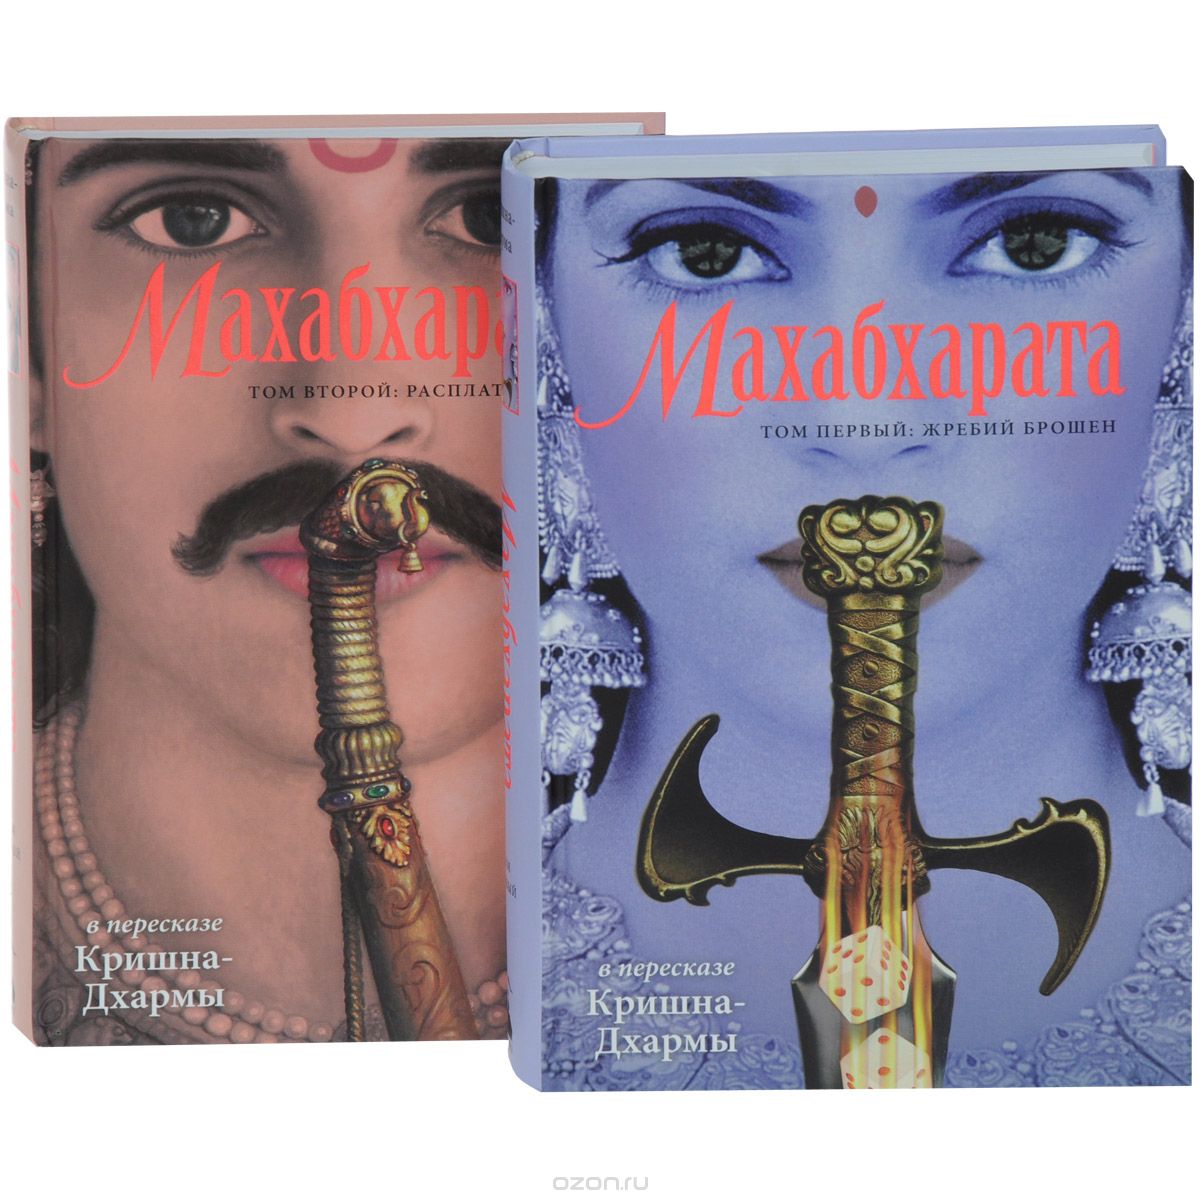 Скачать книгу "Махабхарата в 2 томах (комплект из 2 книг), Кришна-Дхарма дас"